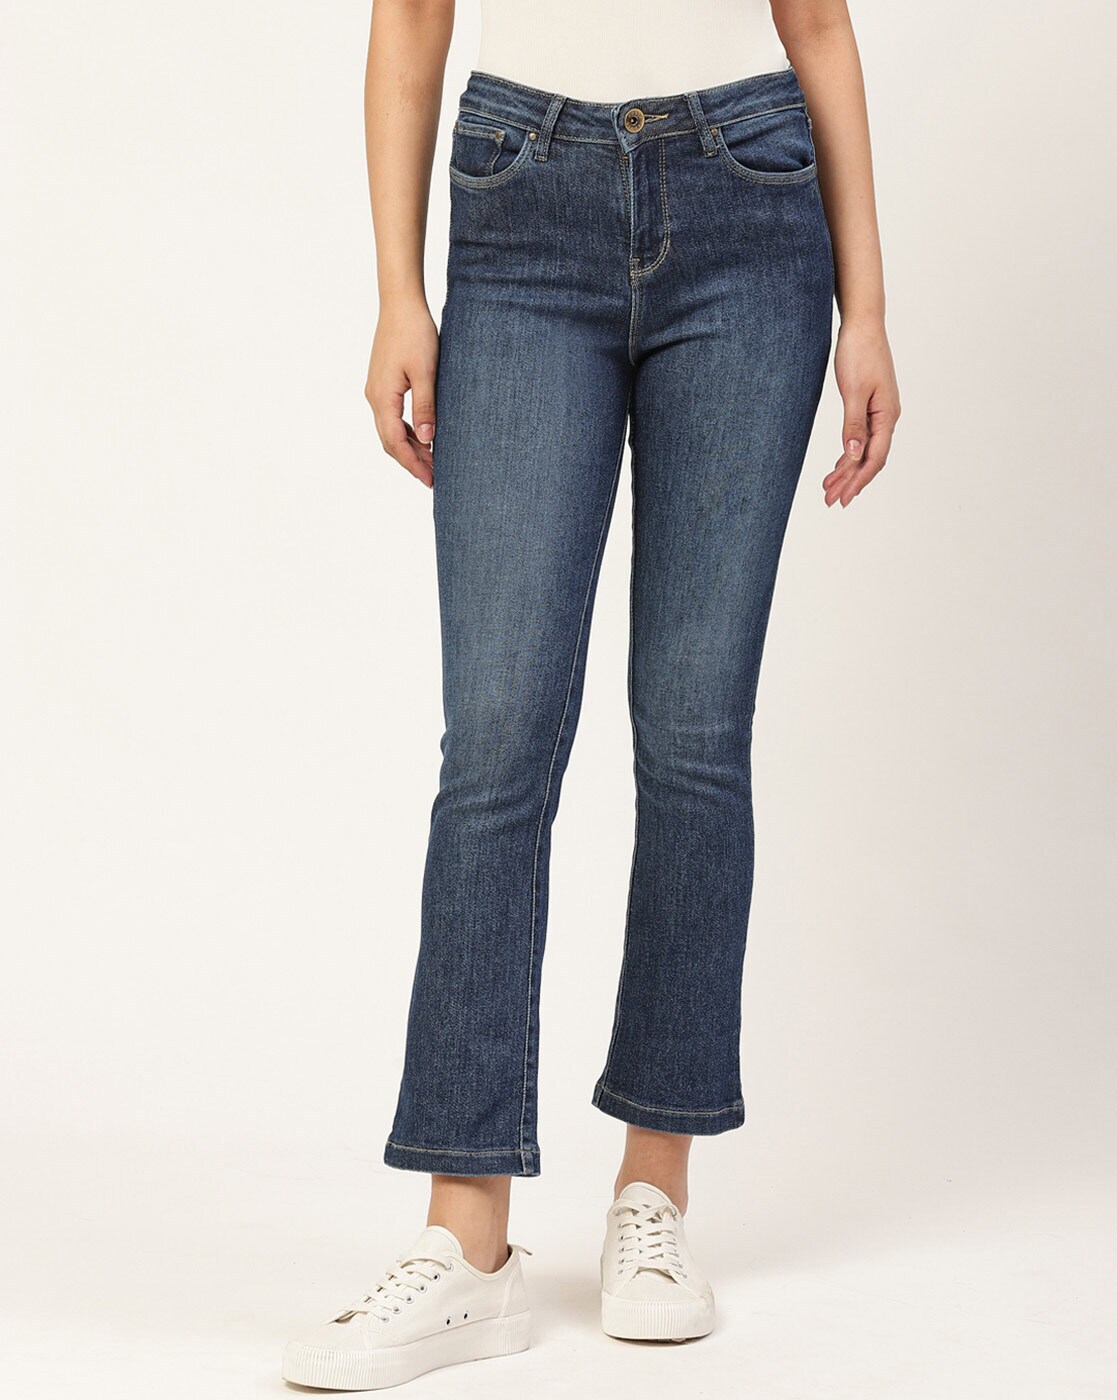 Buy Dark Blue Jeans & Jeggings for Women by Xpose Online